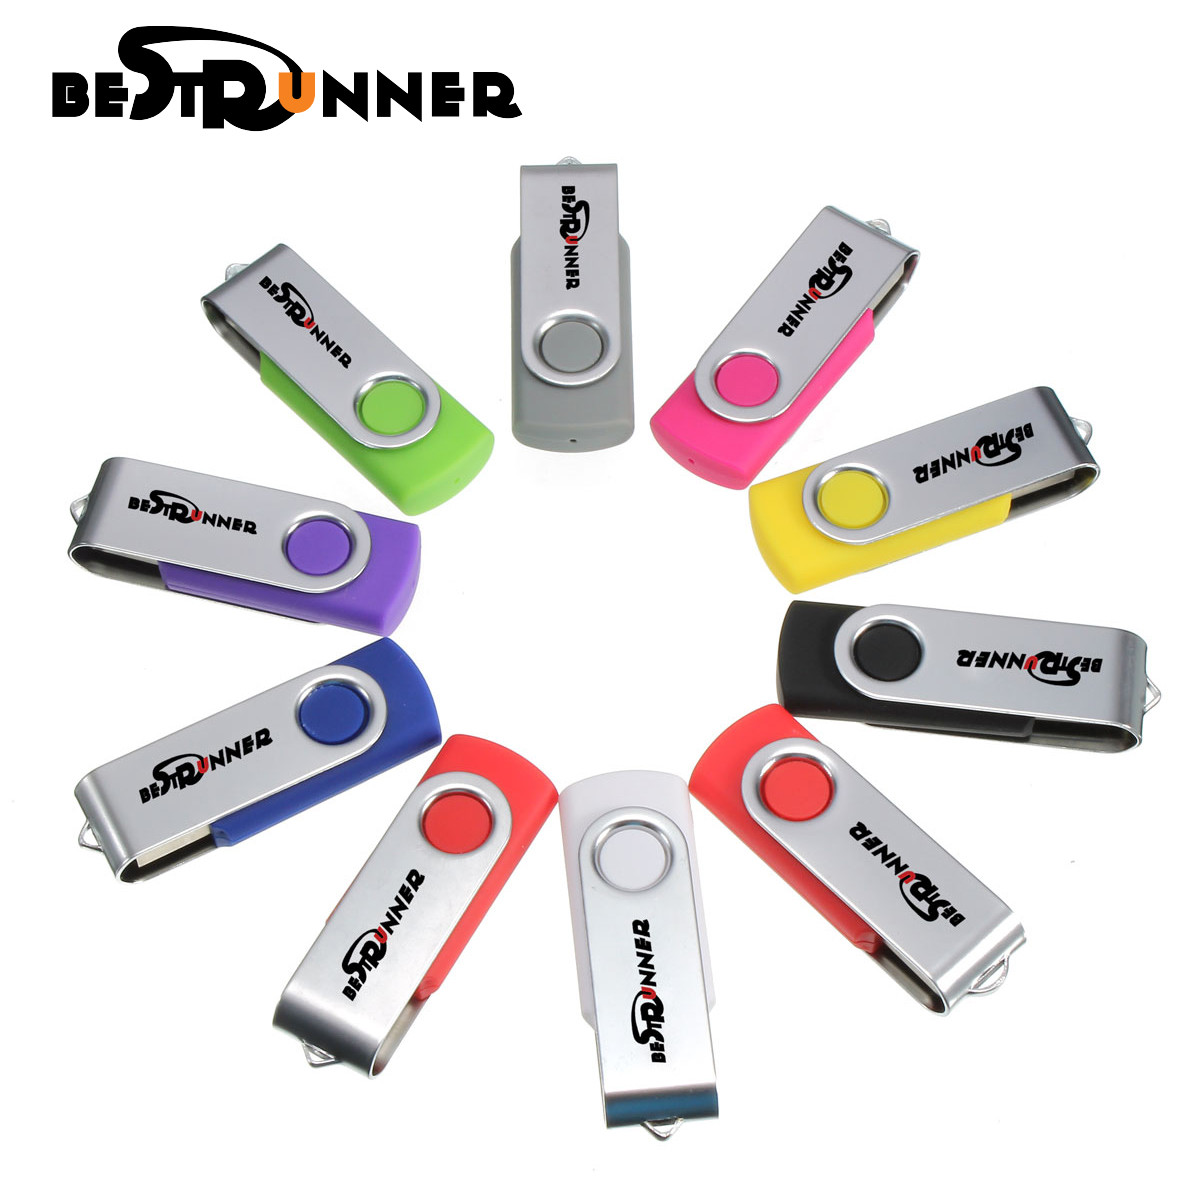 Bestrunner 8GB Foldable USB 2.0 Flash Drive Thumbstick Pen Drive Memory U Disk 24